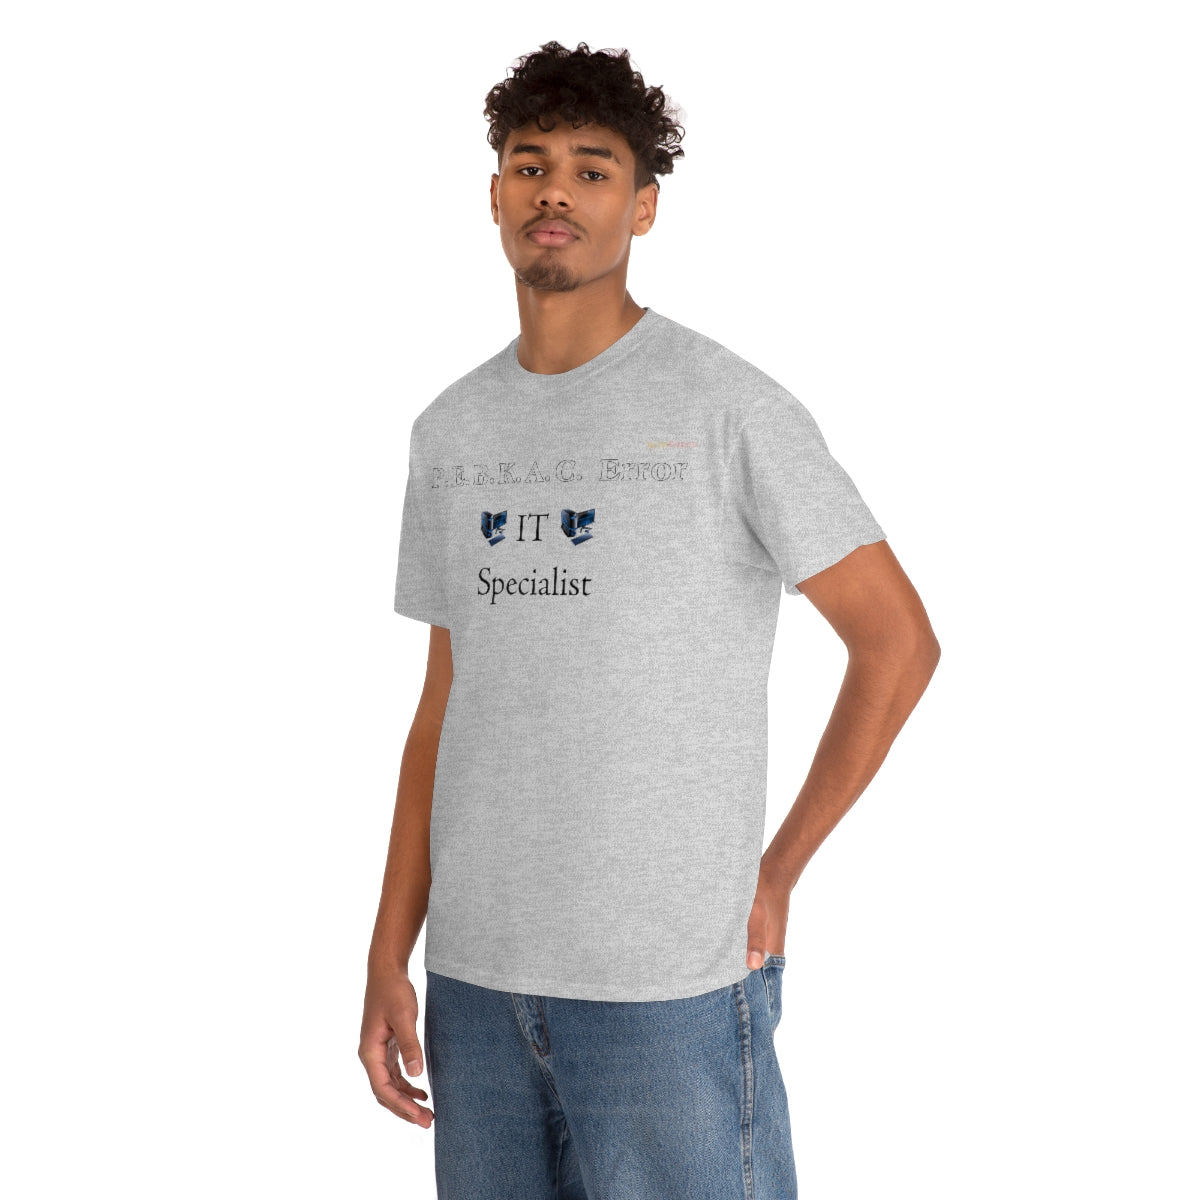 PEBKAC Error T-Shirt-2 (Tech Lovers Black Letters)